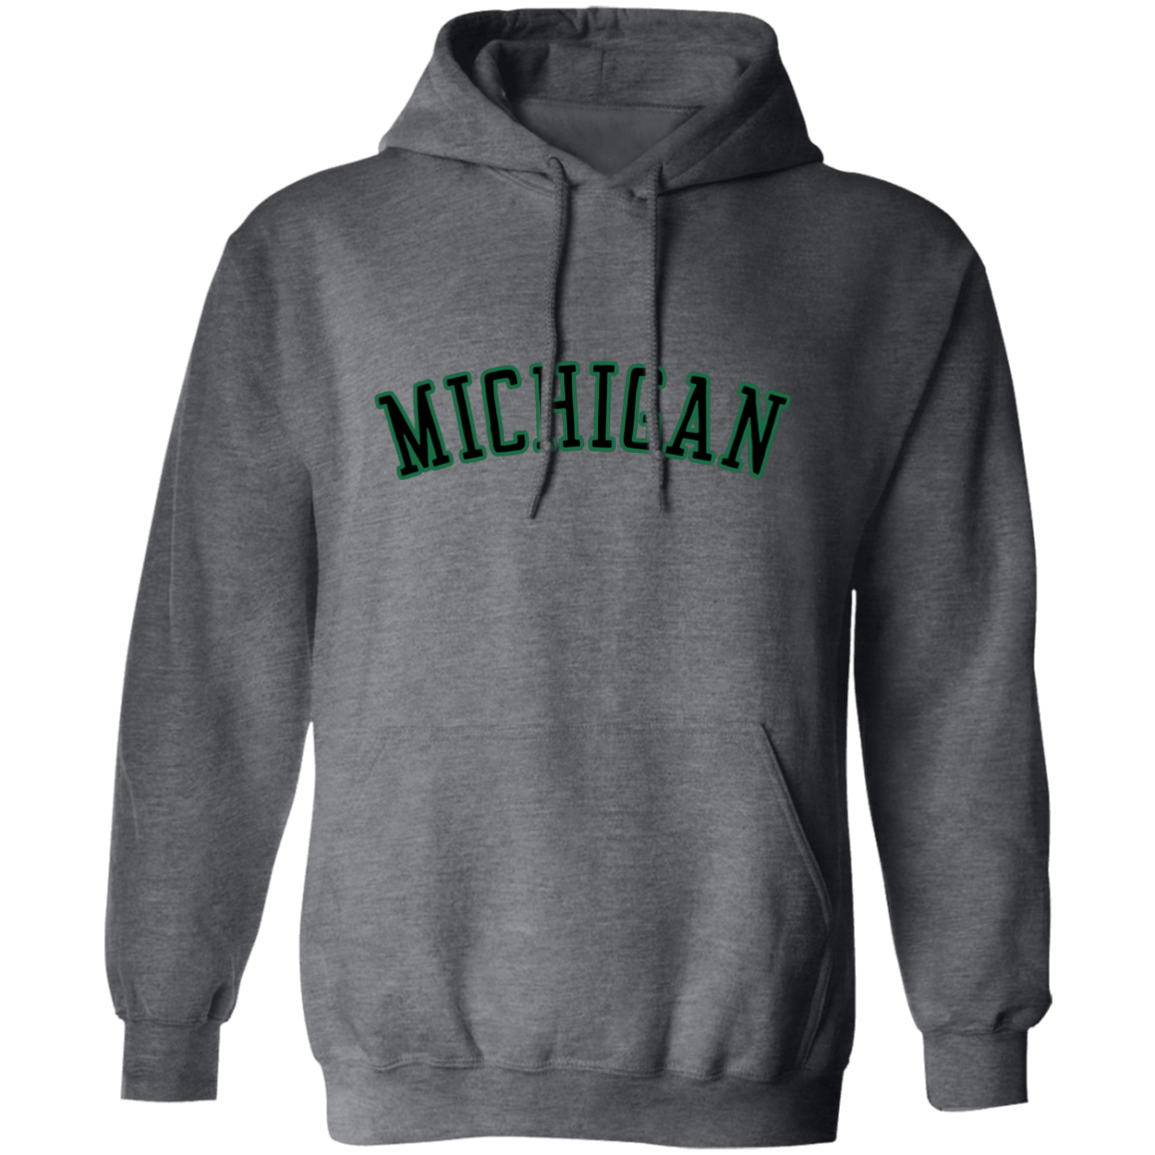 Michigan College Pullover Hoodie, Birthday Gift Unisex College Hoodie